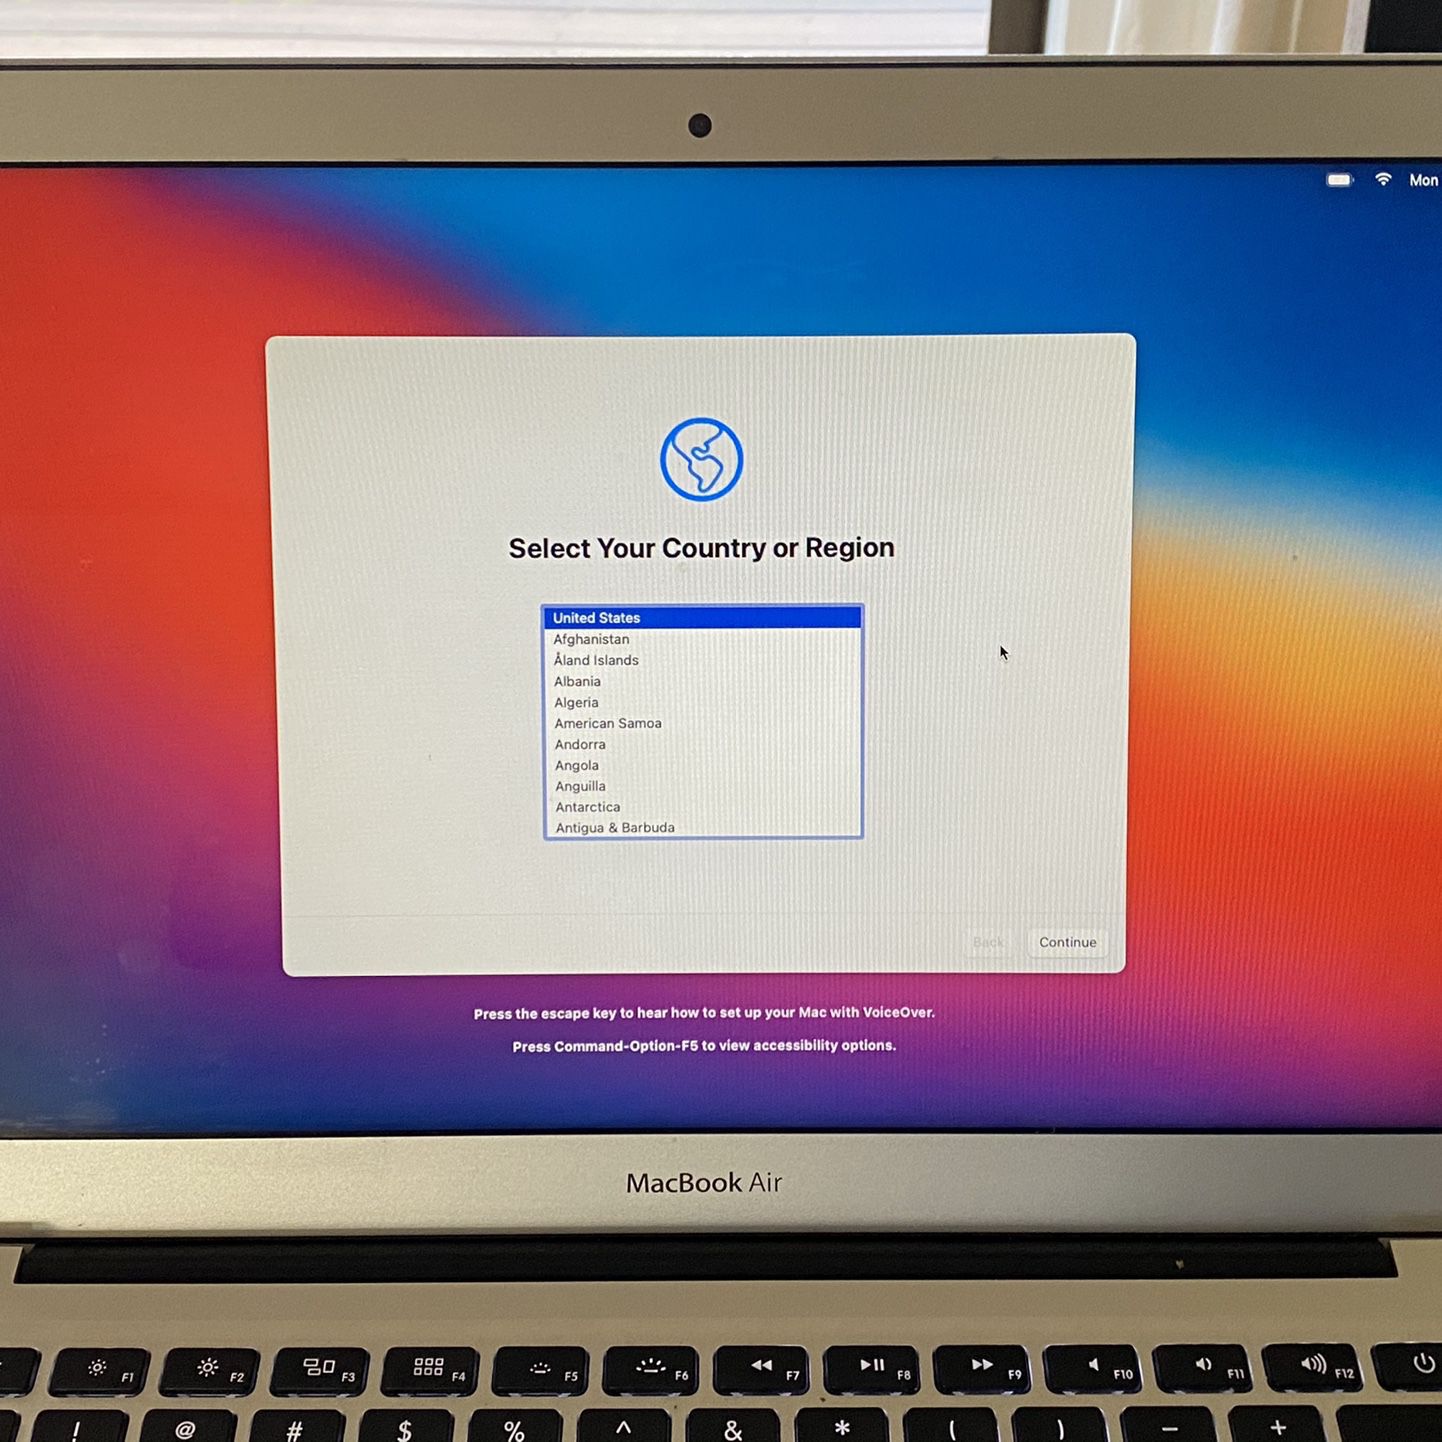 MacBook Air “Core i5” 1.4 13” (Early 2014)